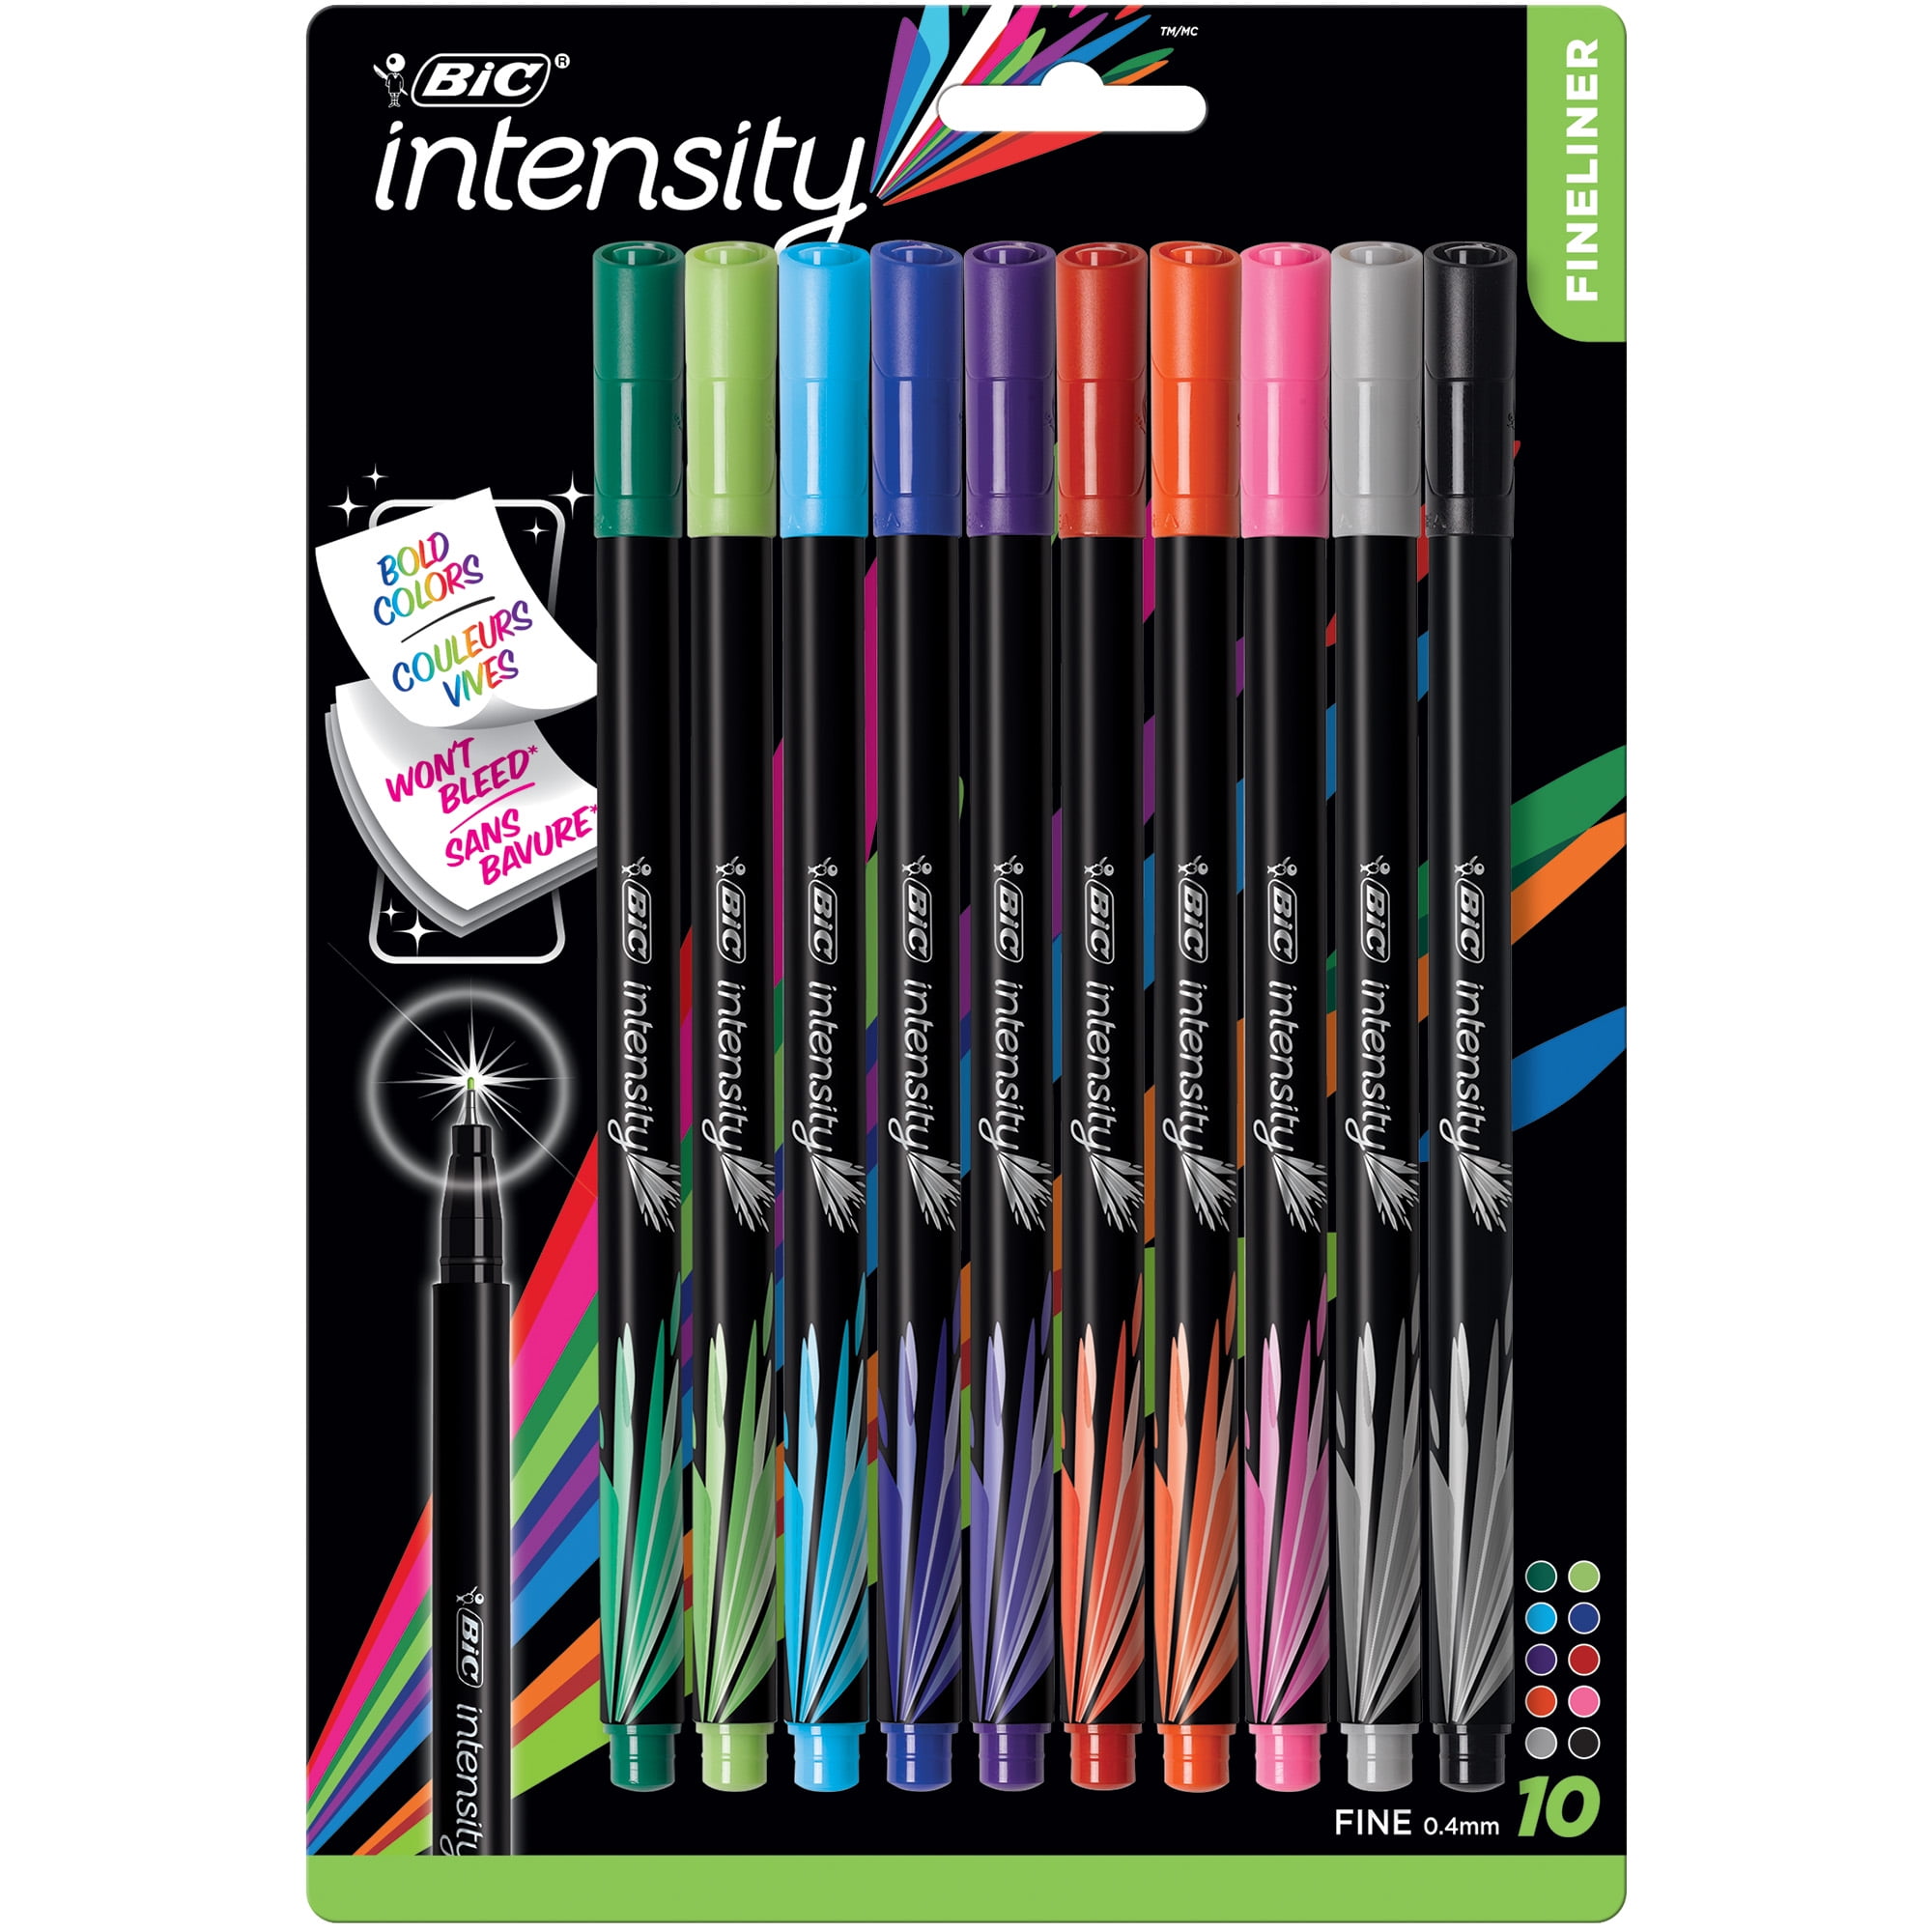 BIC Intensity Fineliner Felt Pens, Fine Point (0.4 mm), Assorted Colors, 10-Count